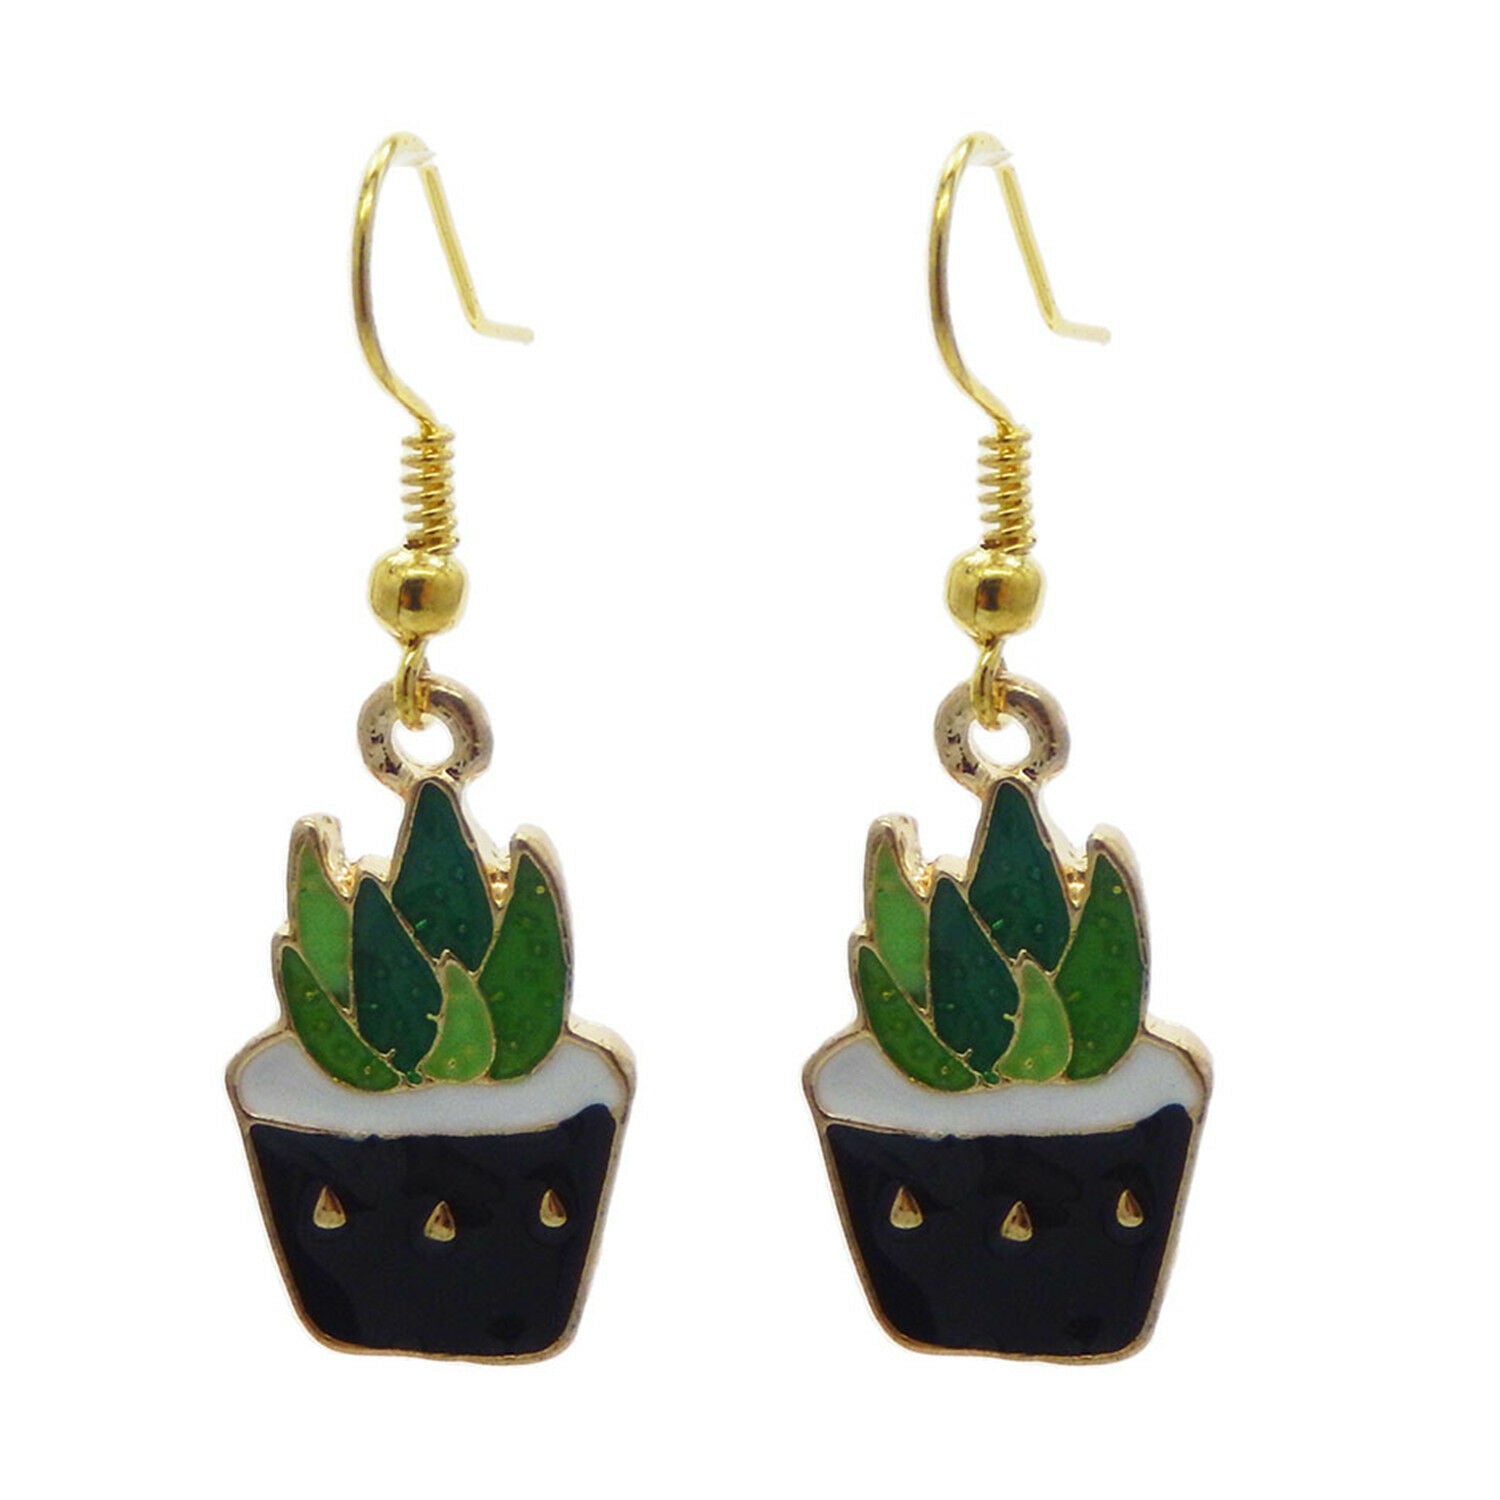 1 Pair Enamel Plated Metal Cactus Charm Dangle Earrings Handmade Jewelry Gift